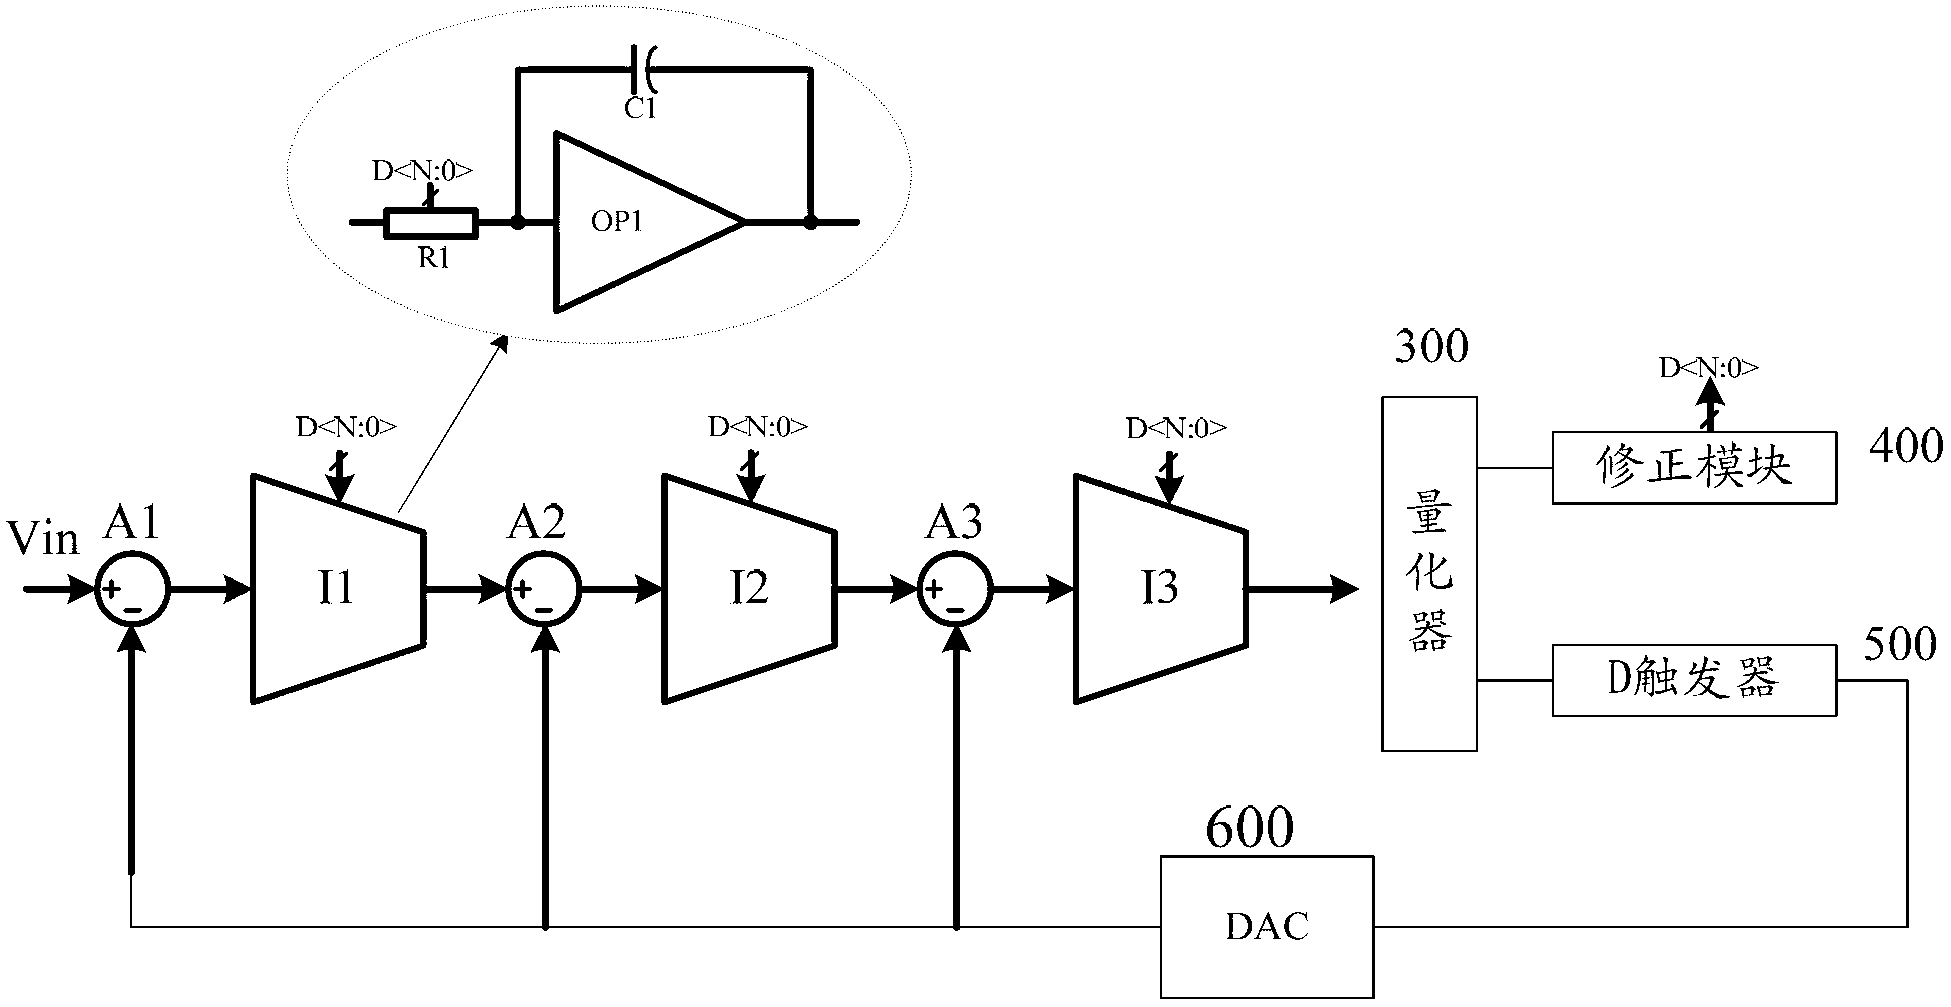 Sigma-Delta modulator and analog/digital converter